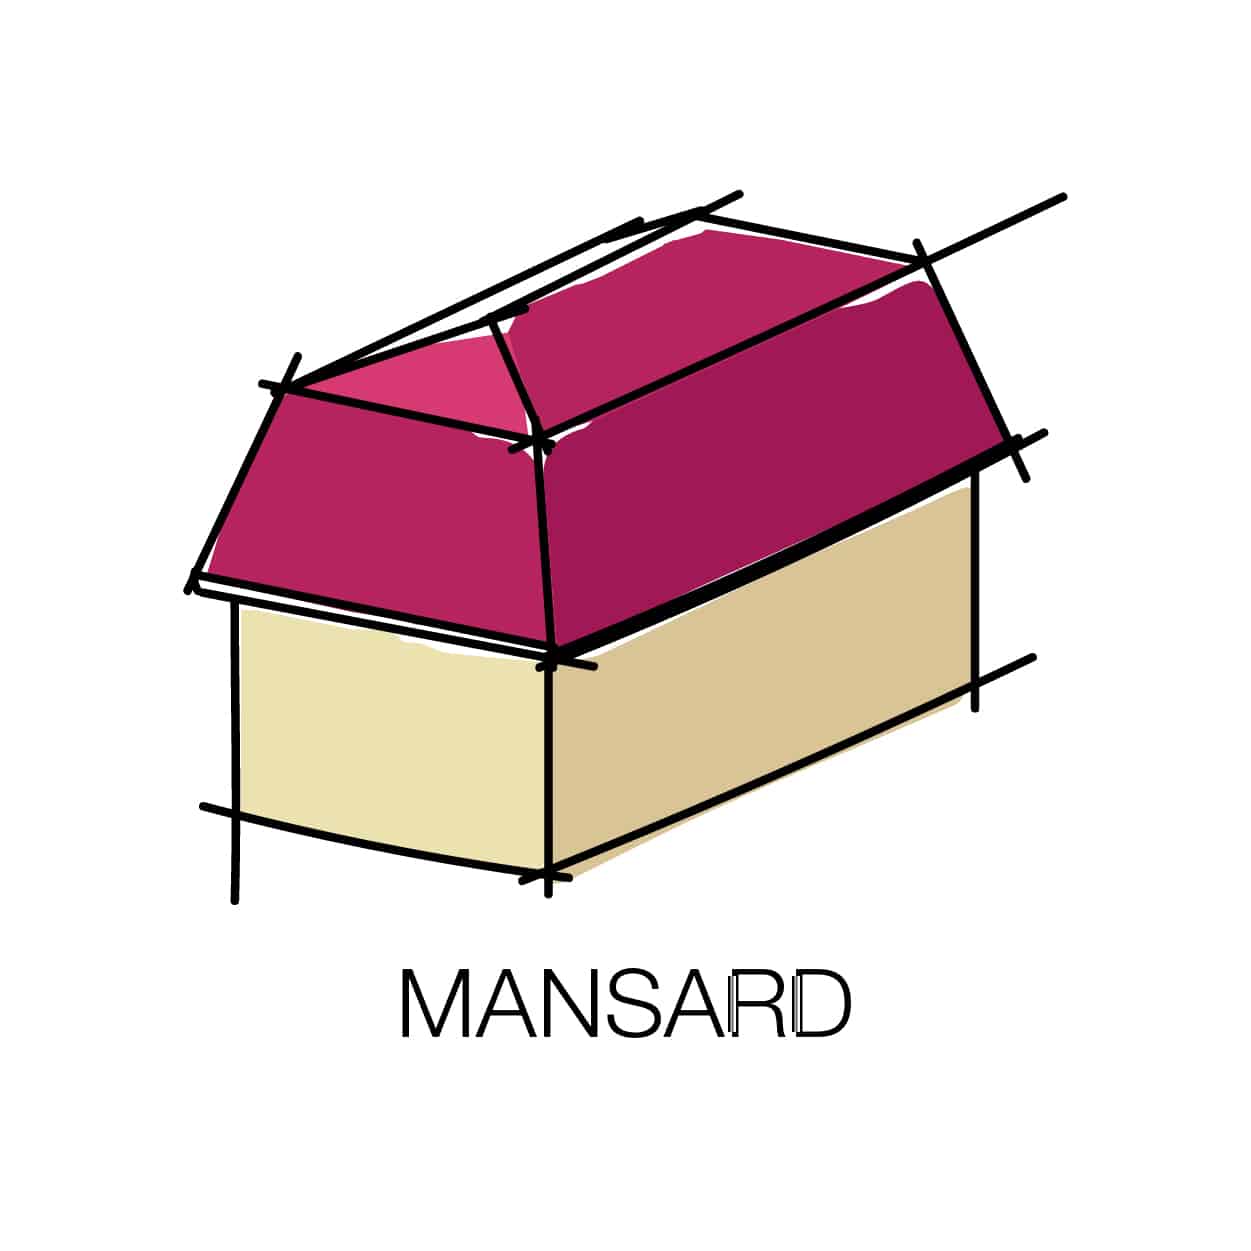 Mansard roof type